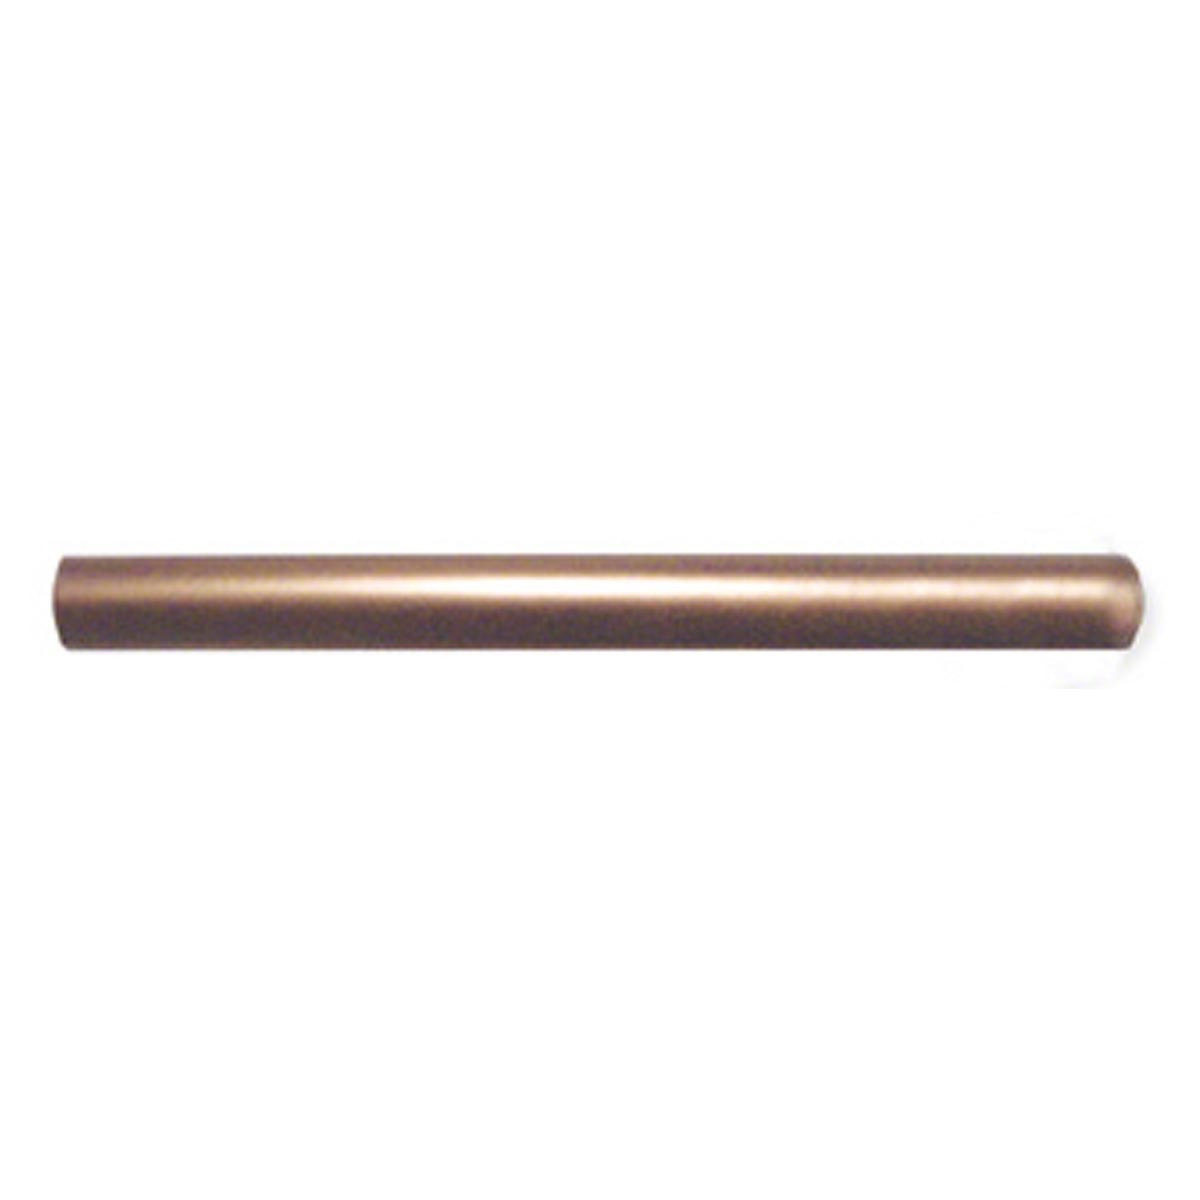 Copper Metal 0.5x6 Half Round Listello Molding